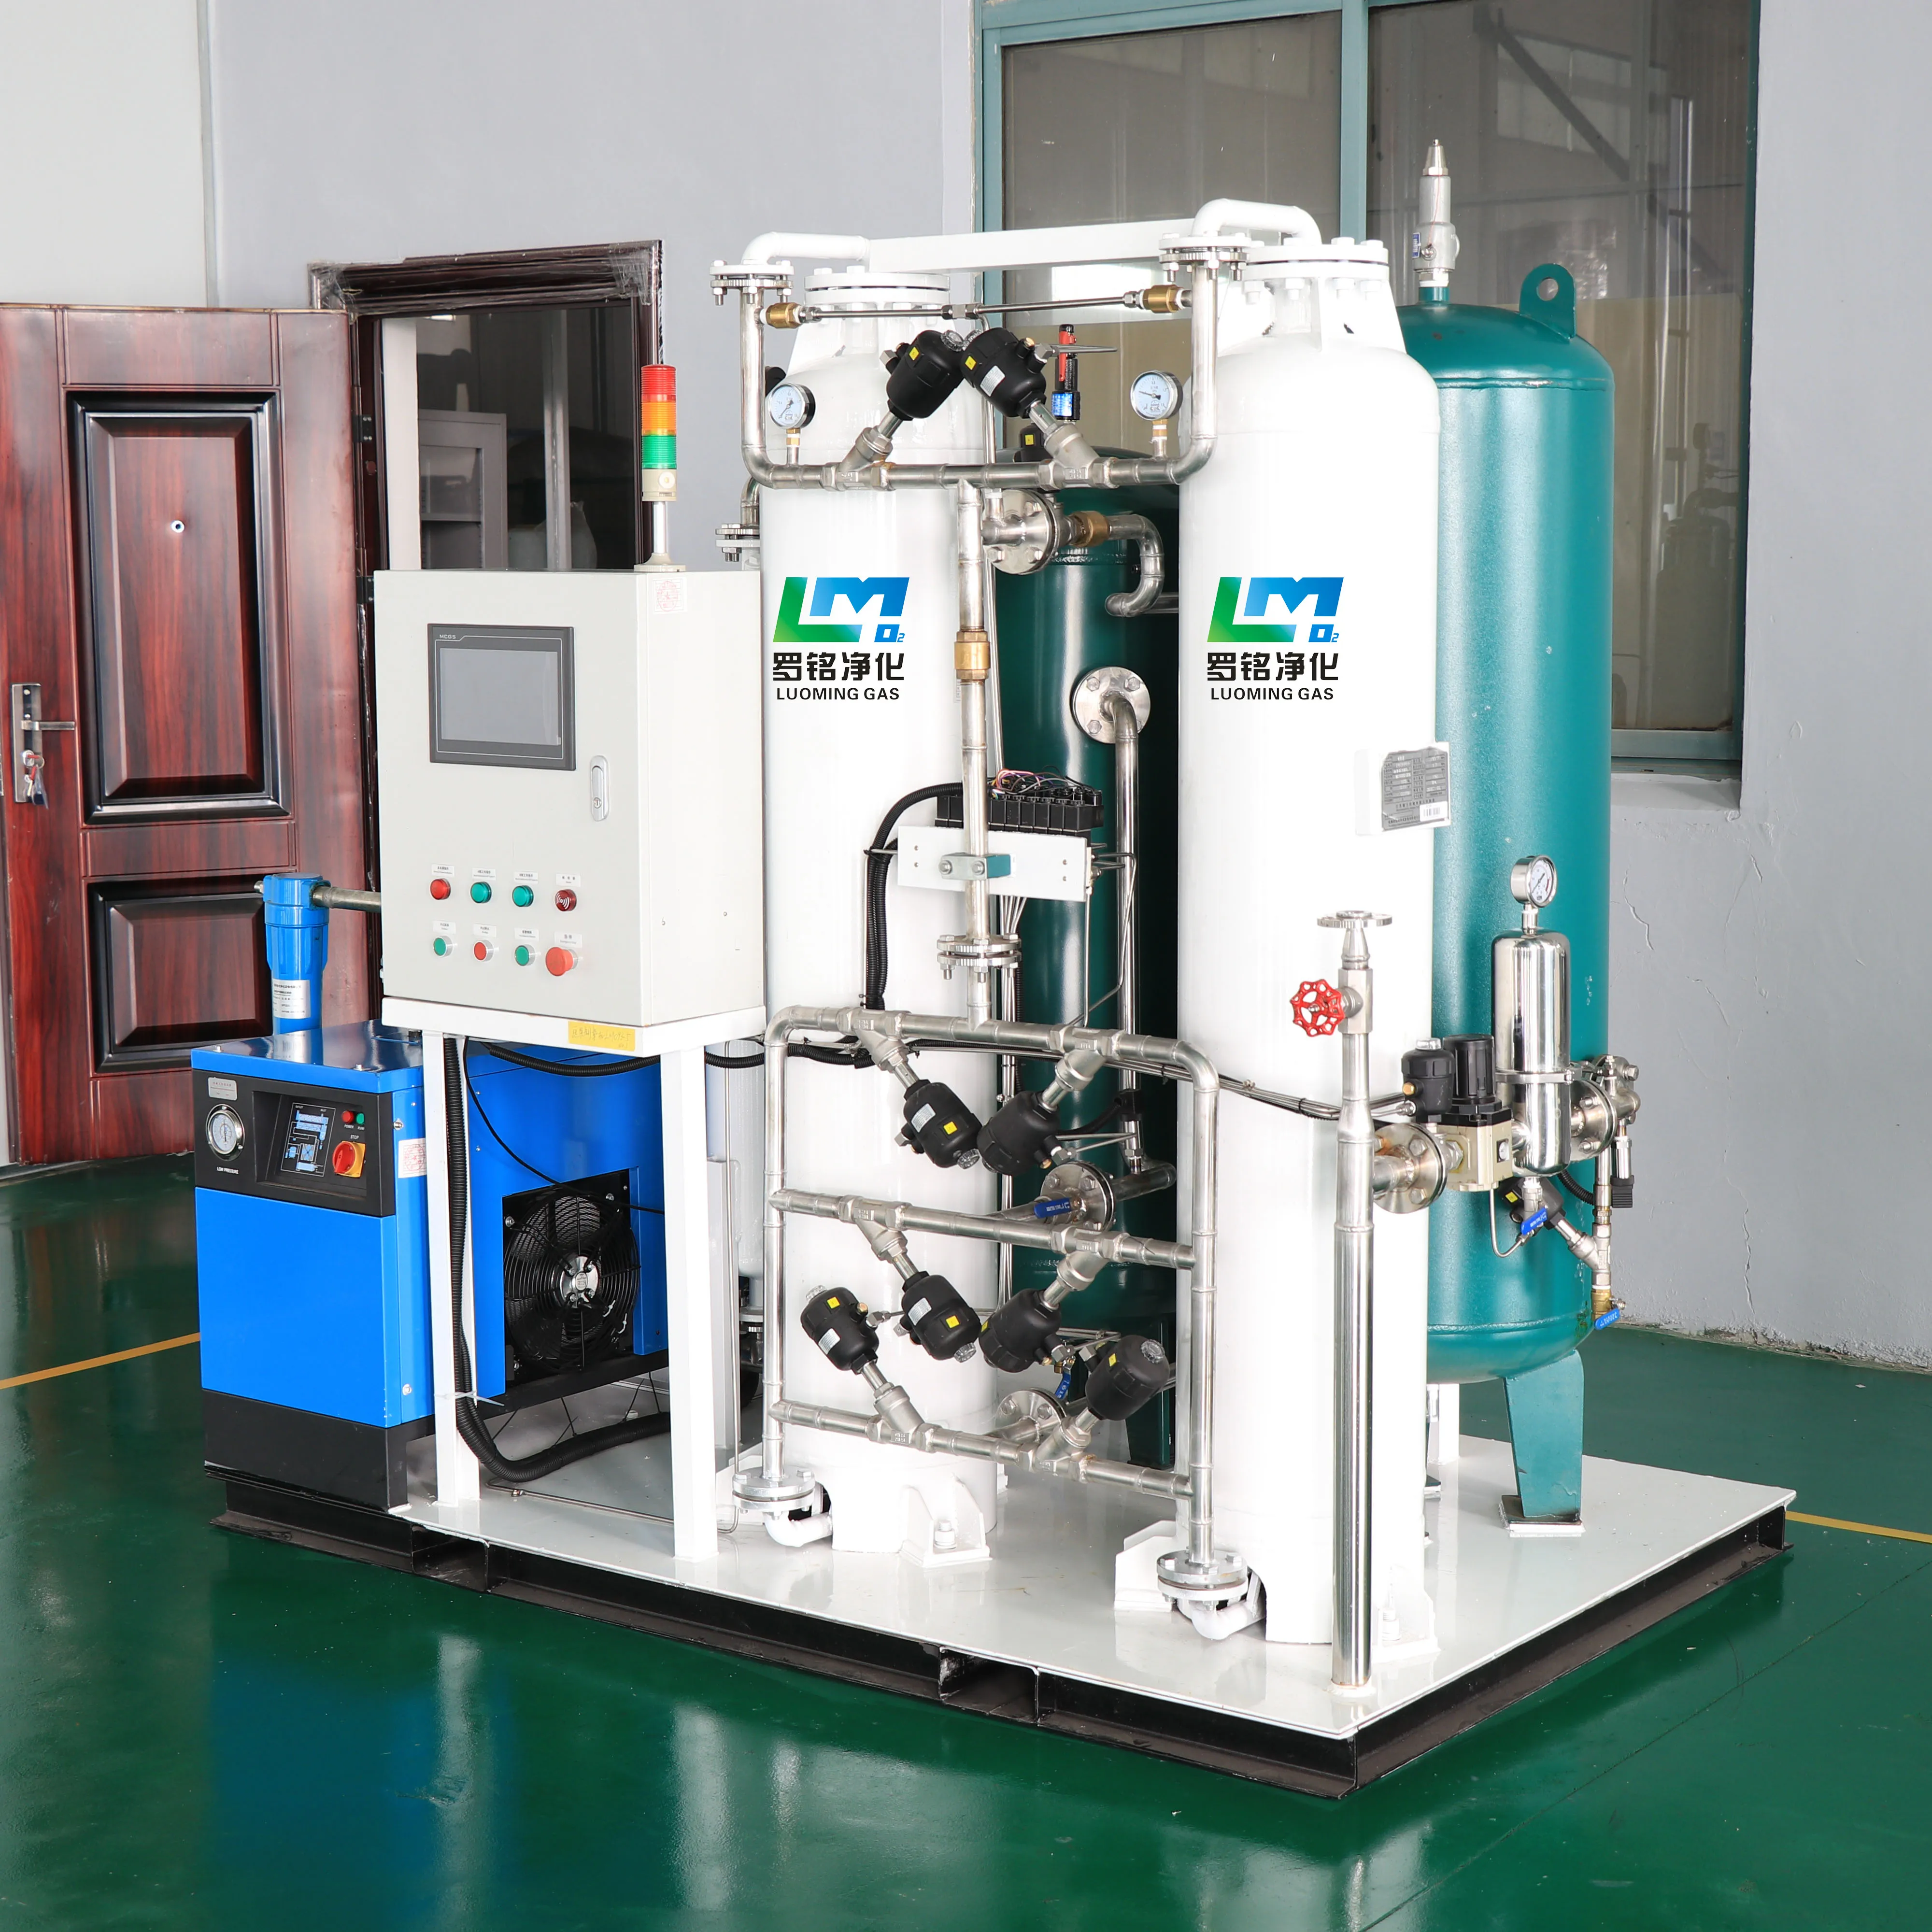 Oxygen generator for hospitals oxygen cylinder refilling machine oxygen production plant